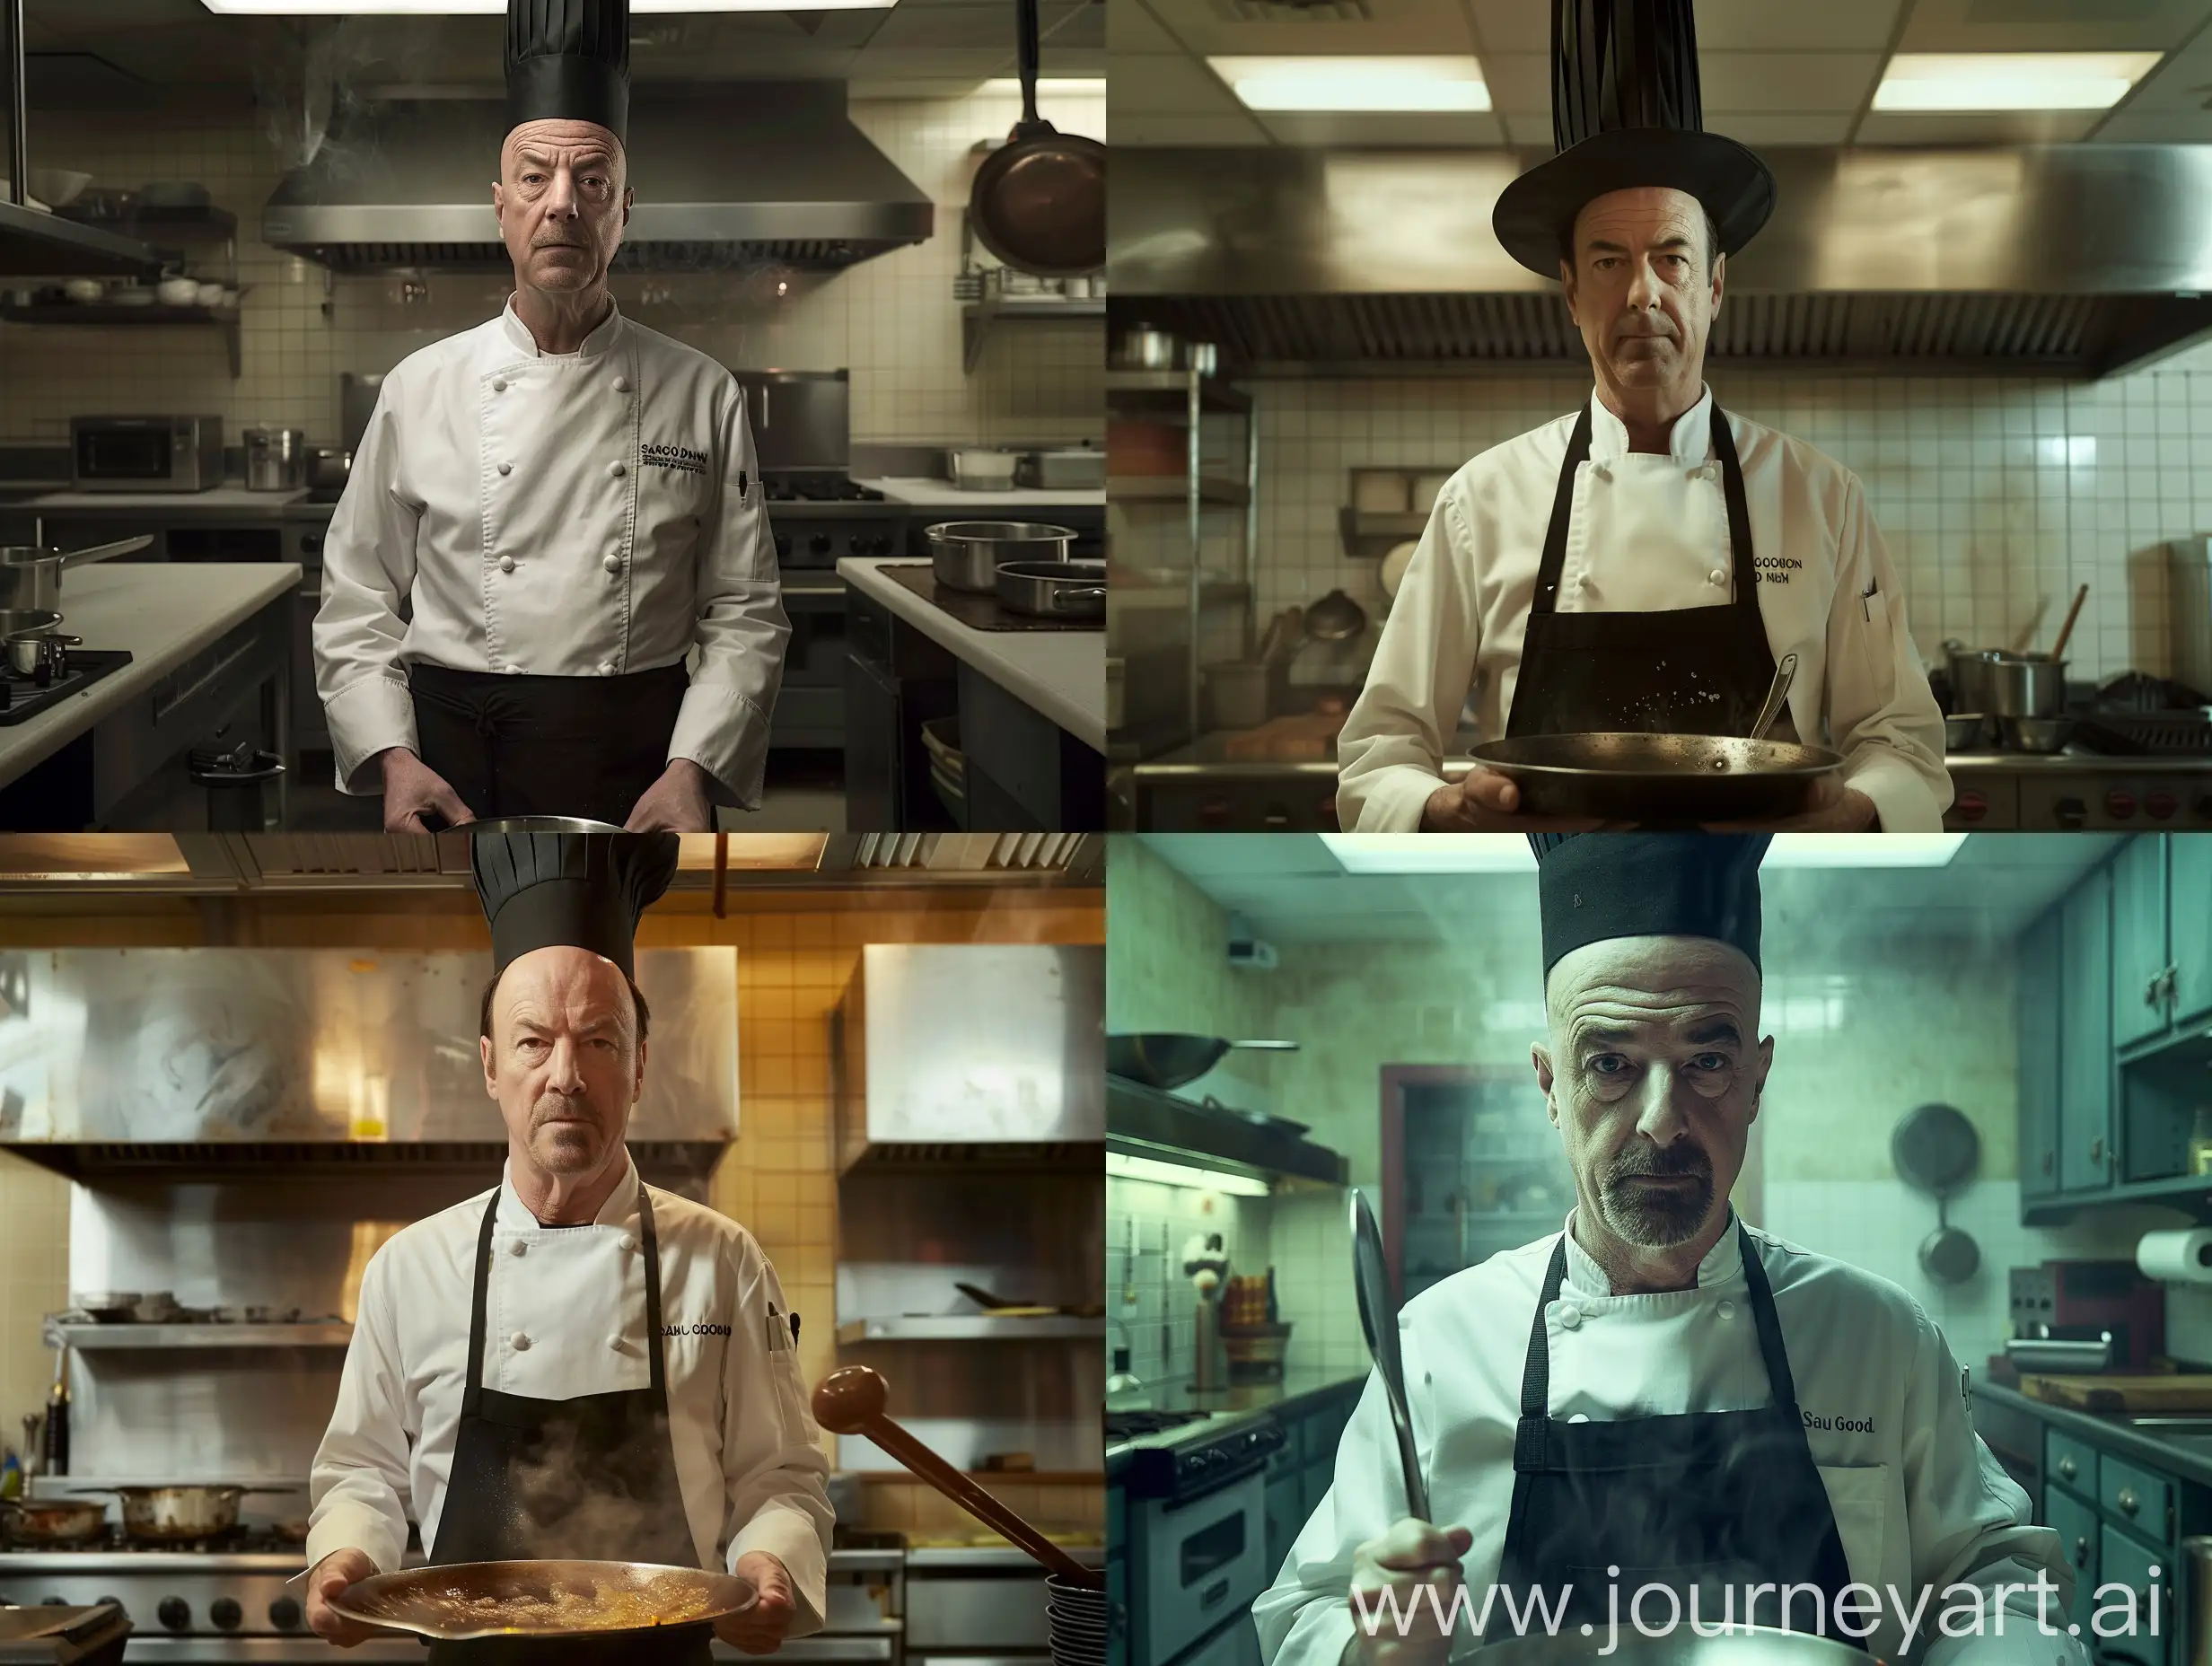 Saul-Goodman-in-Chefs-Attire-A-HighQuality-Kitchen-Portrait